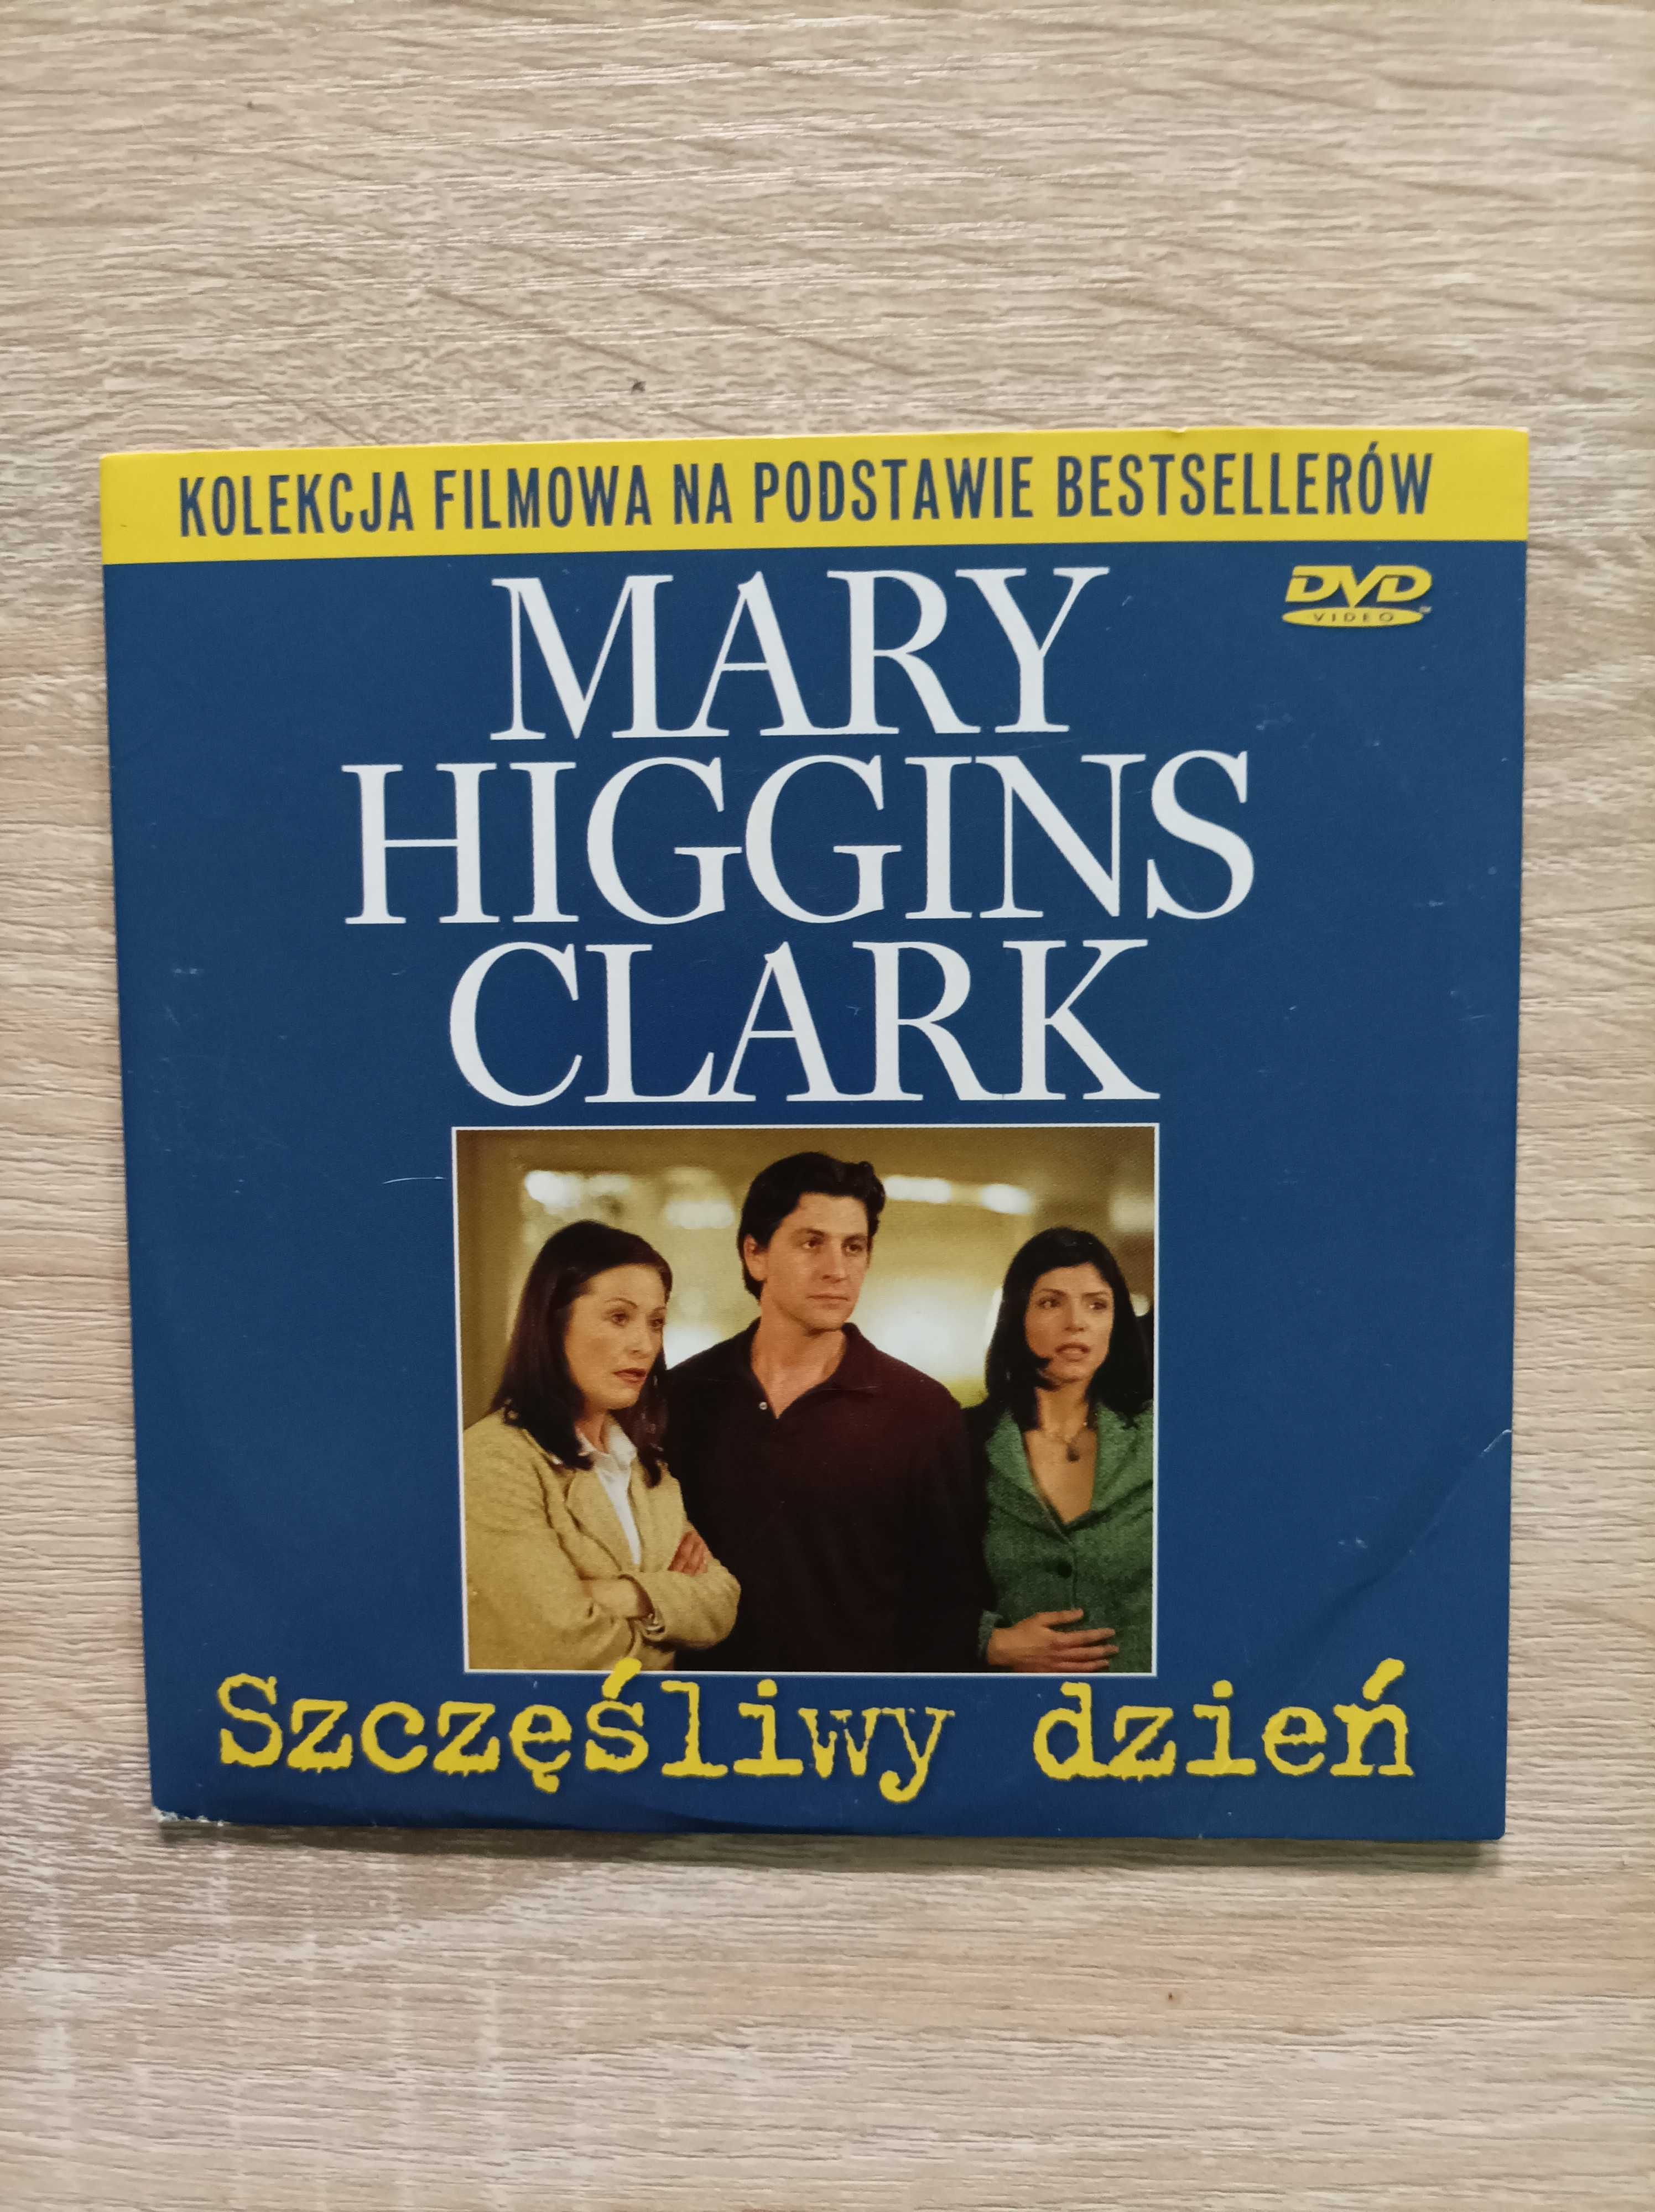 Film DVD Mary Higgins Clark